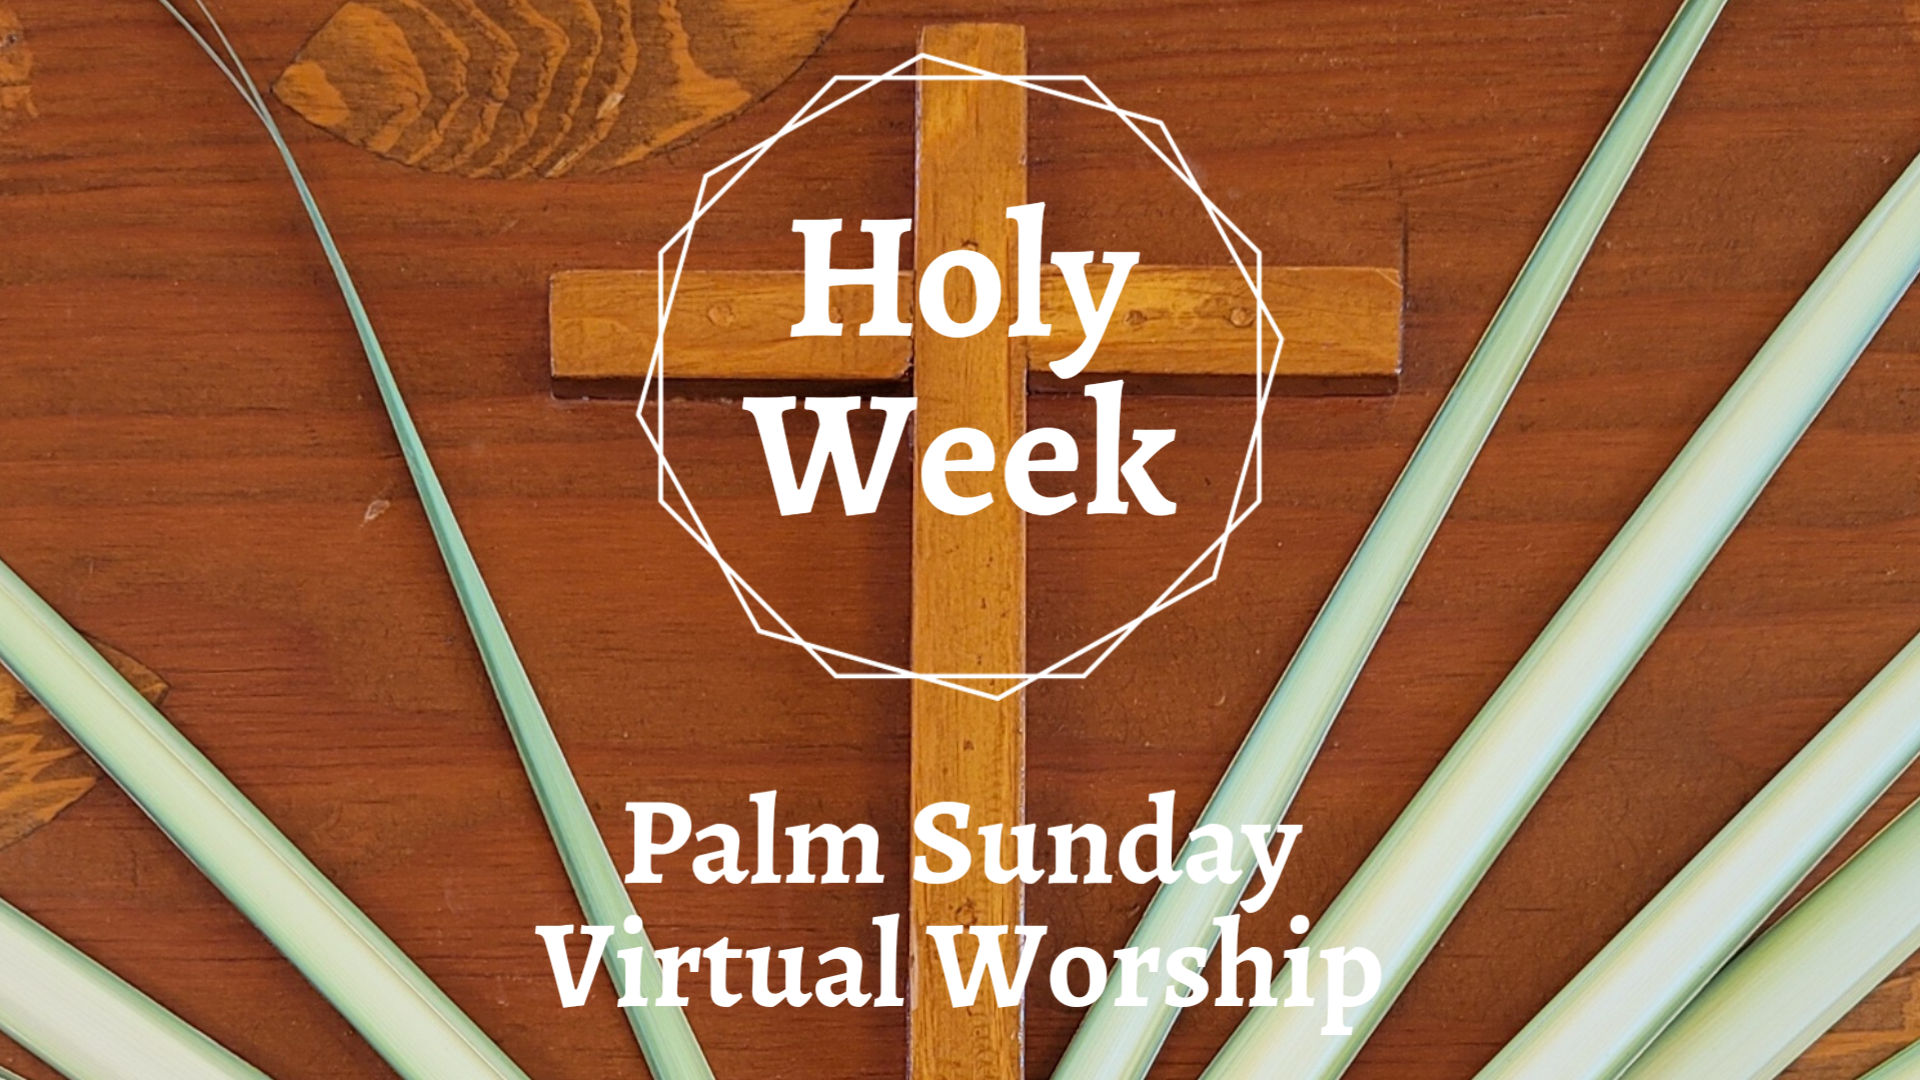 All Saints Virtual Worship - Hosanna!